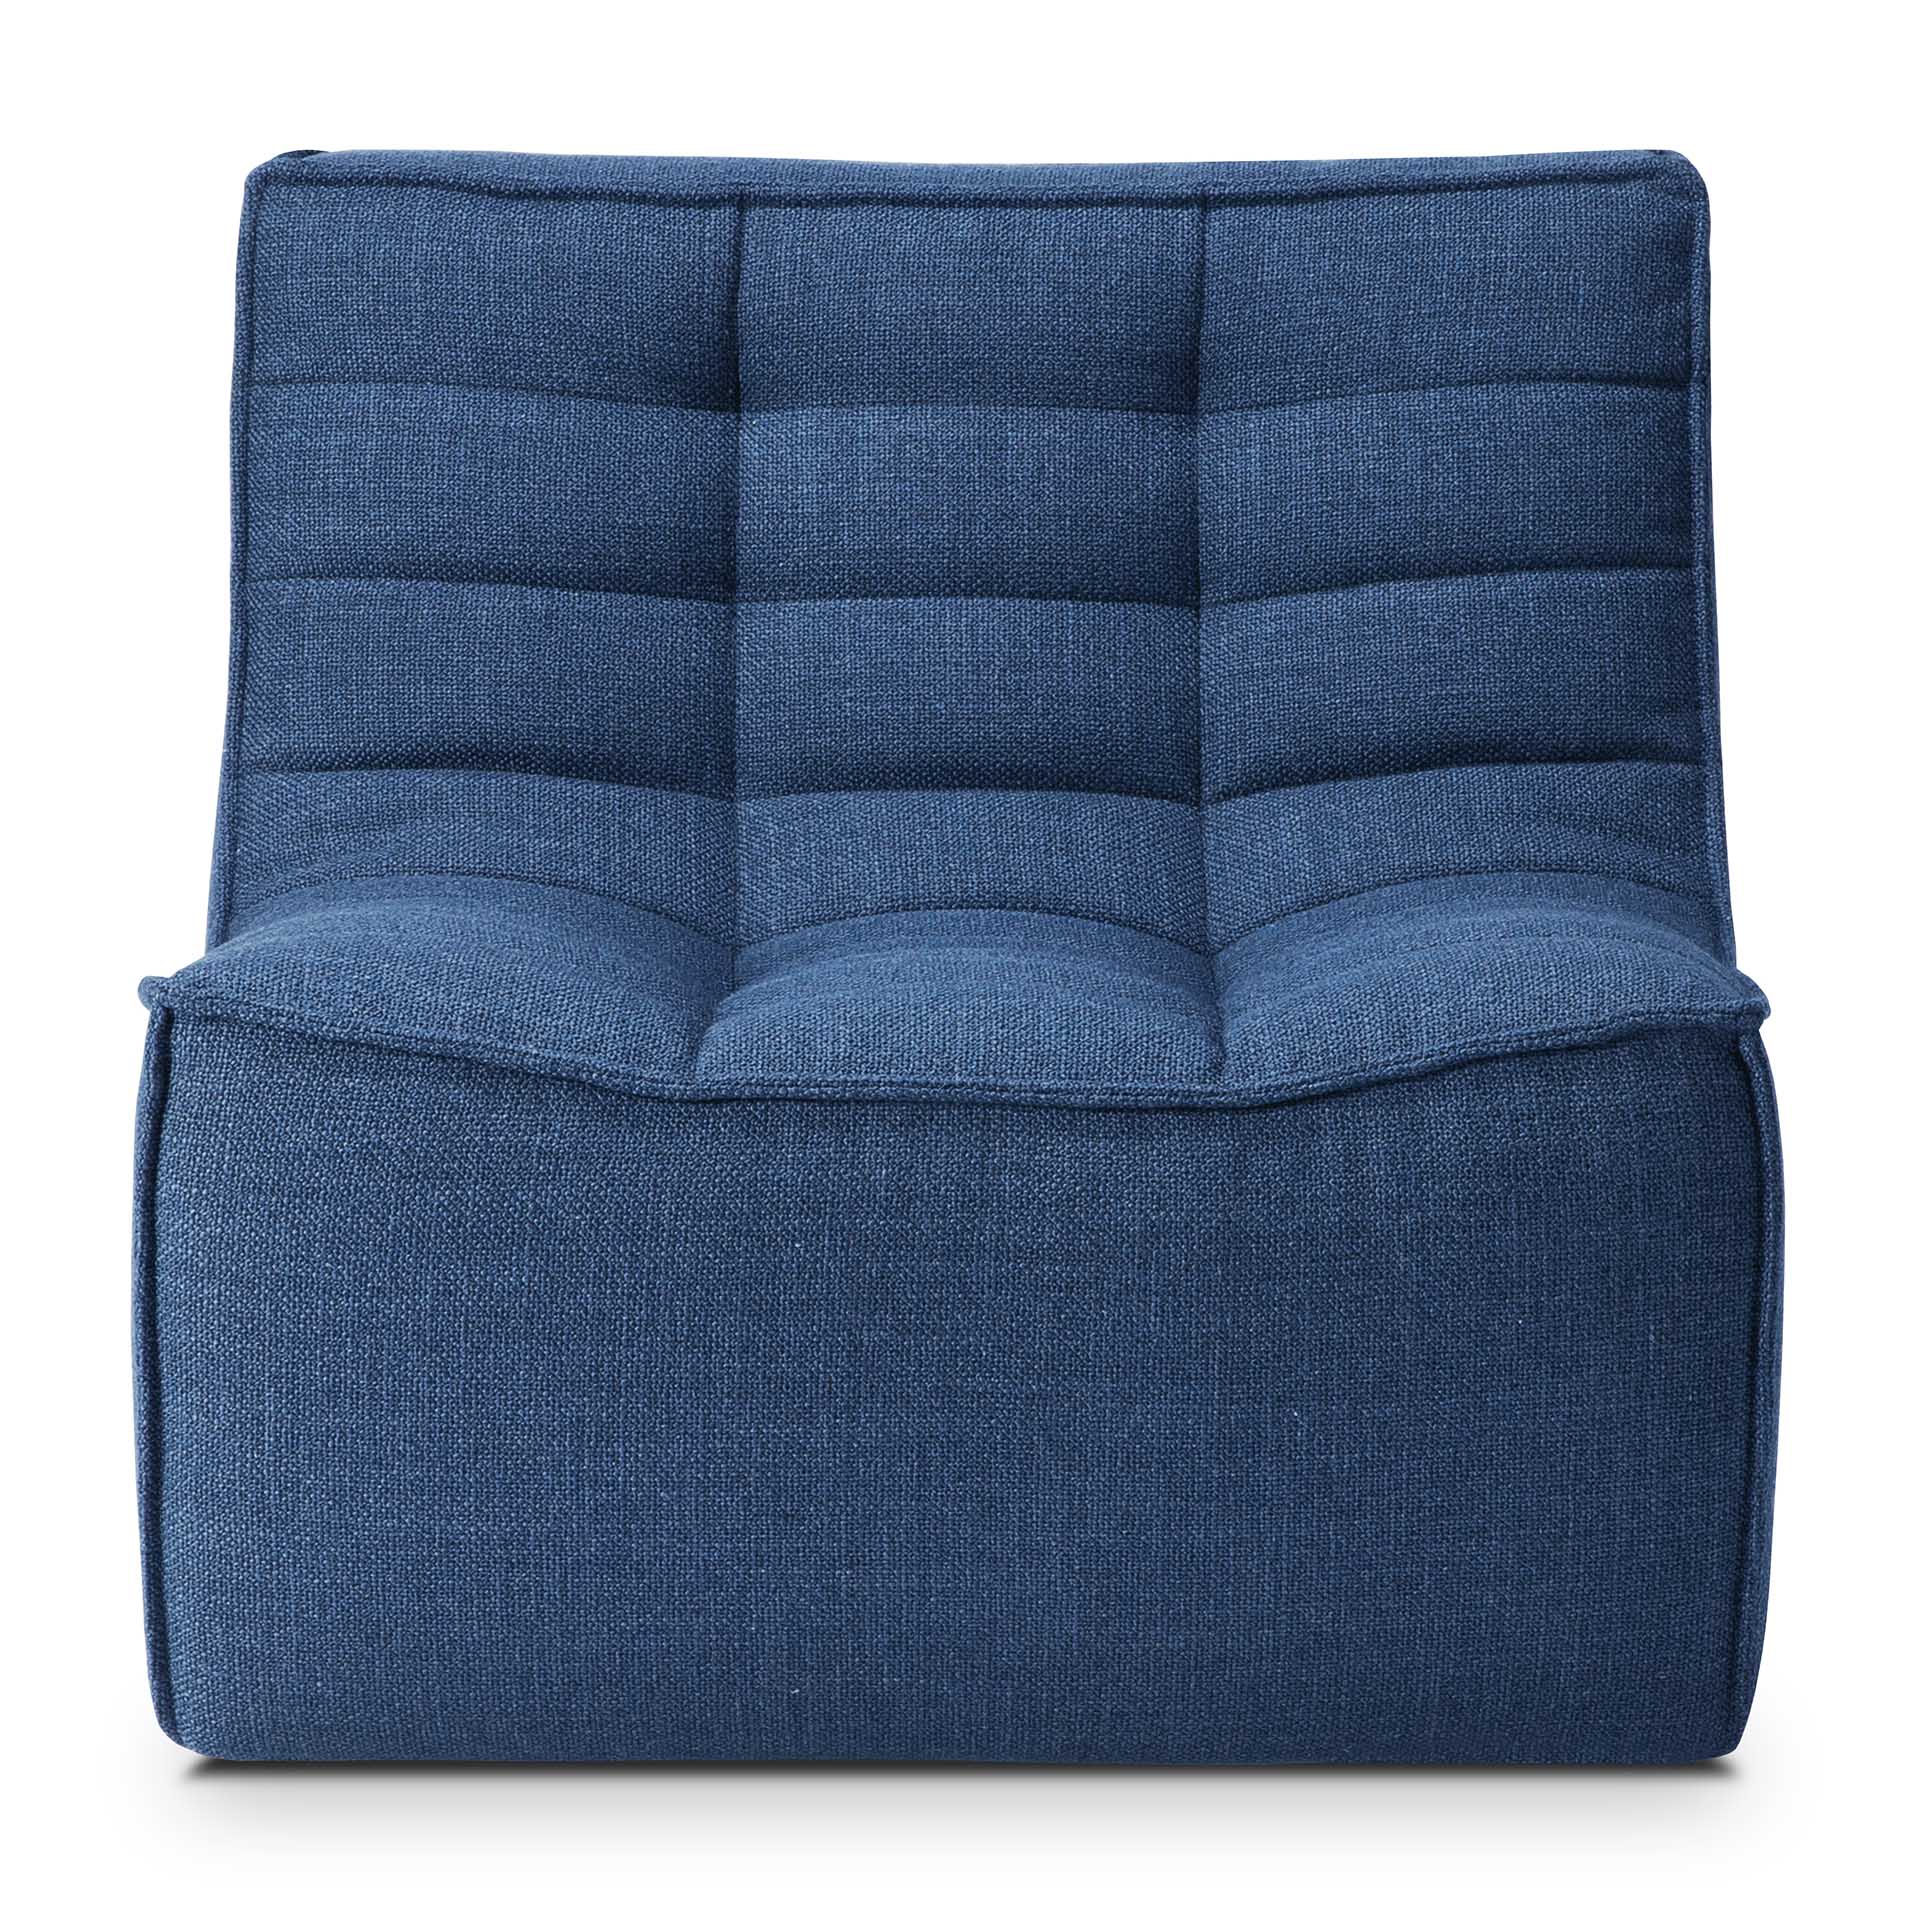 N701_sofa_1_seater_blue_Ethnicraft